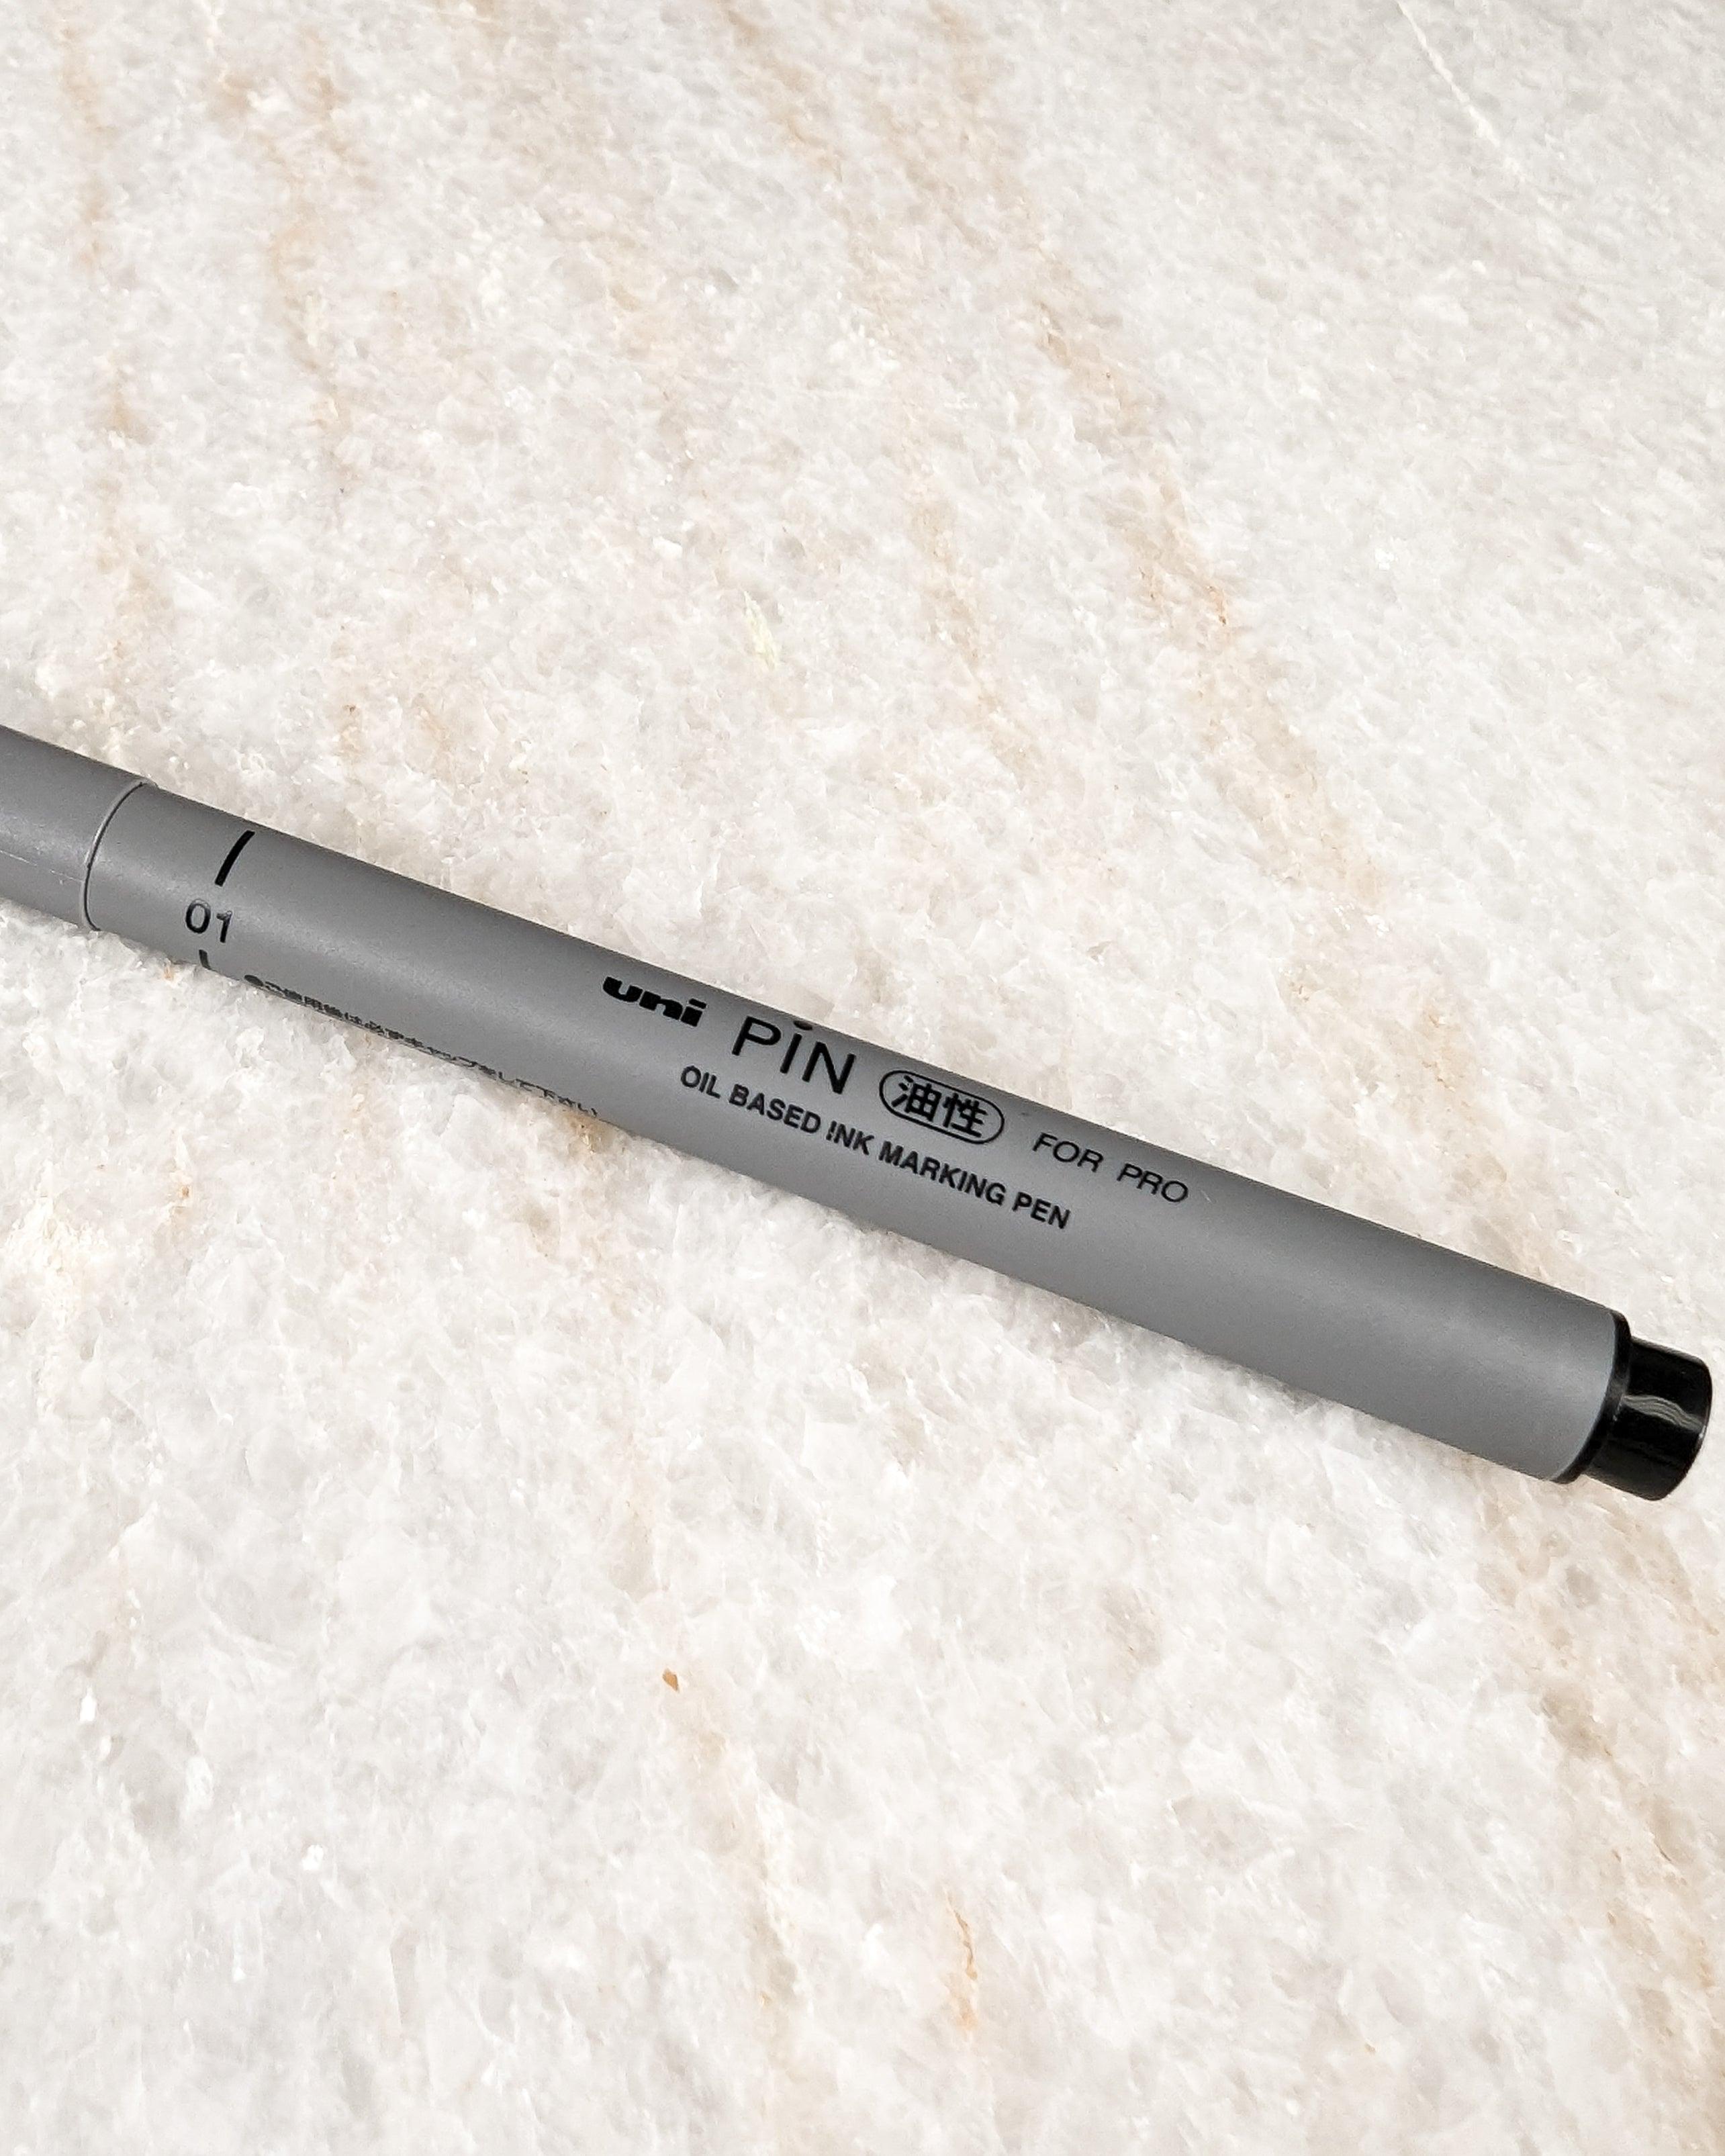 Uni Pin Oil Based Marking Pen.